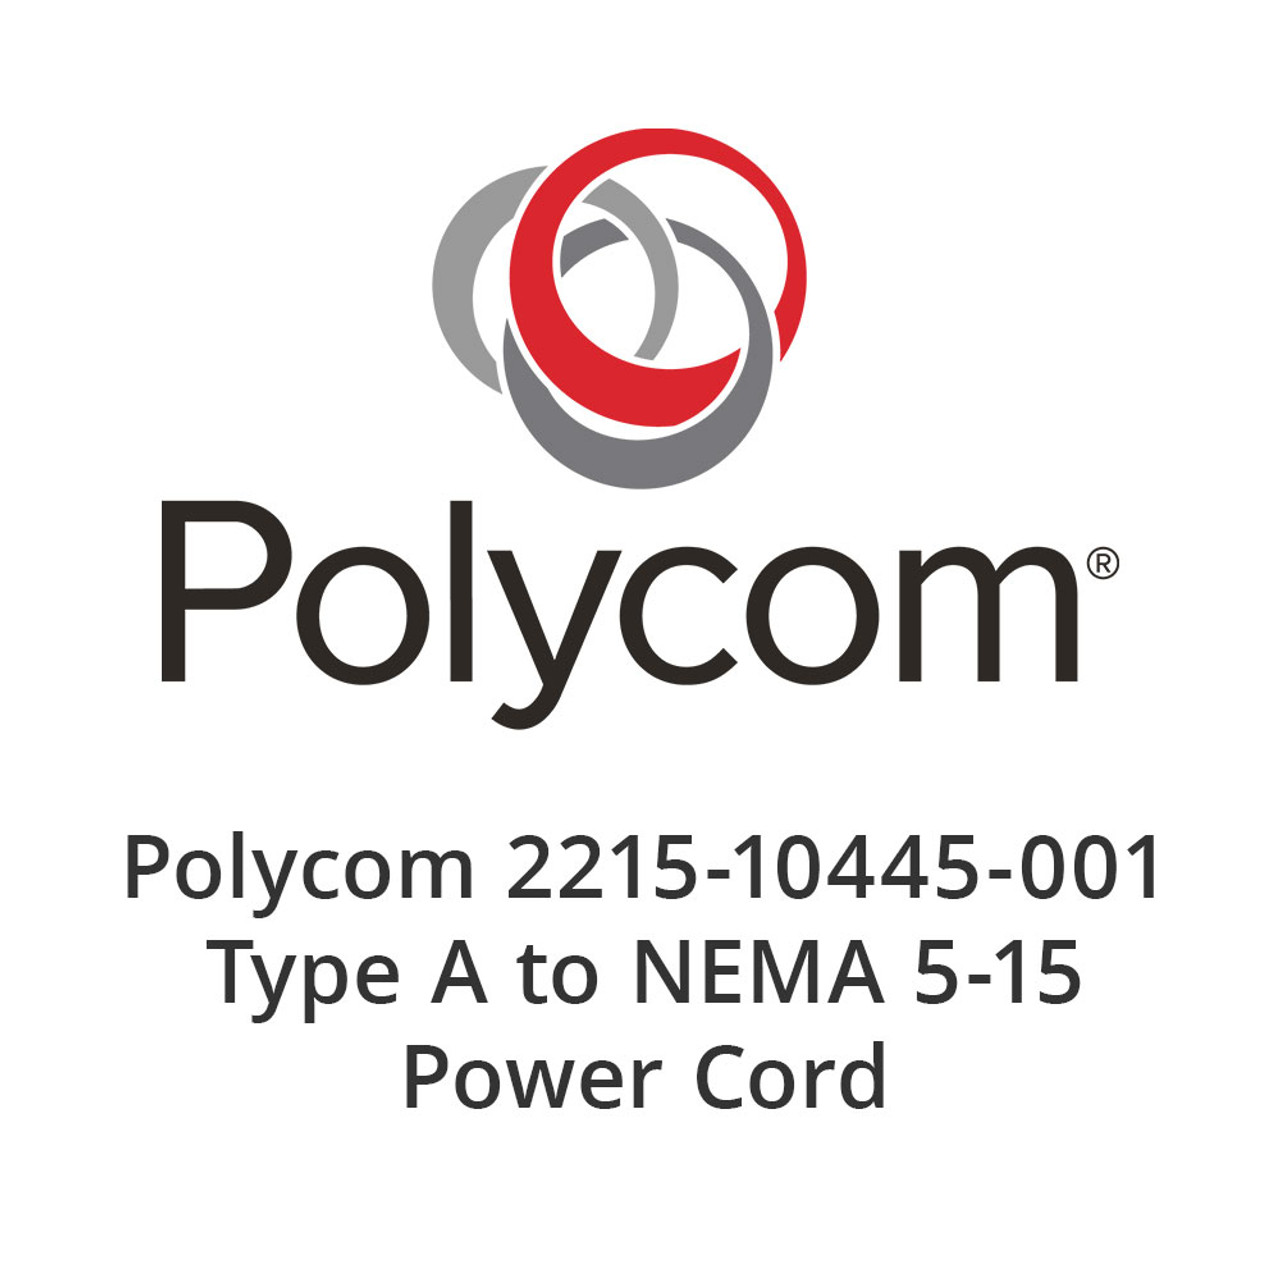 Polycom Type A to NEMA 5-15 Power Cord, 2215-10445-001